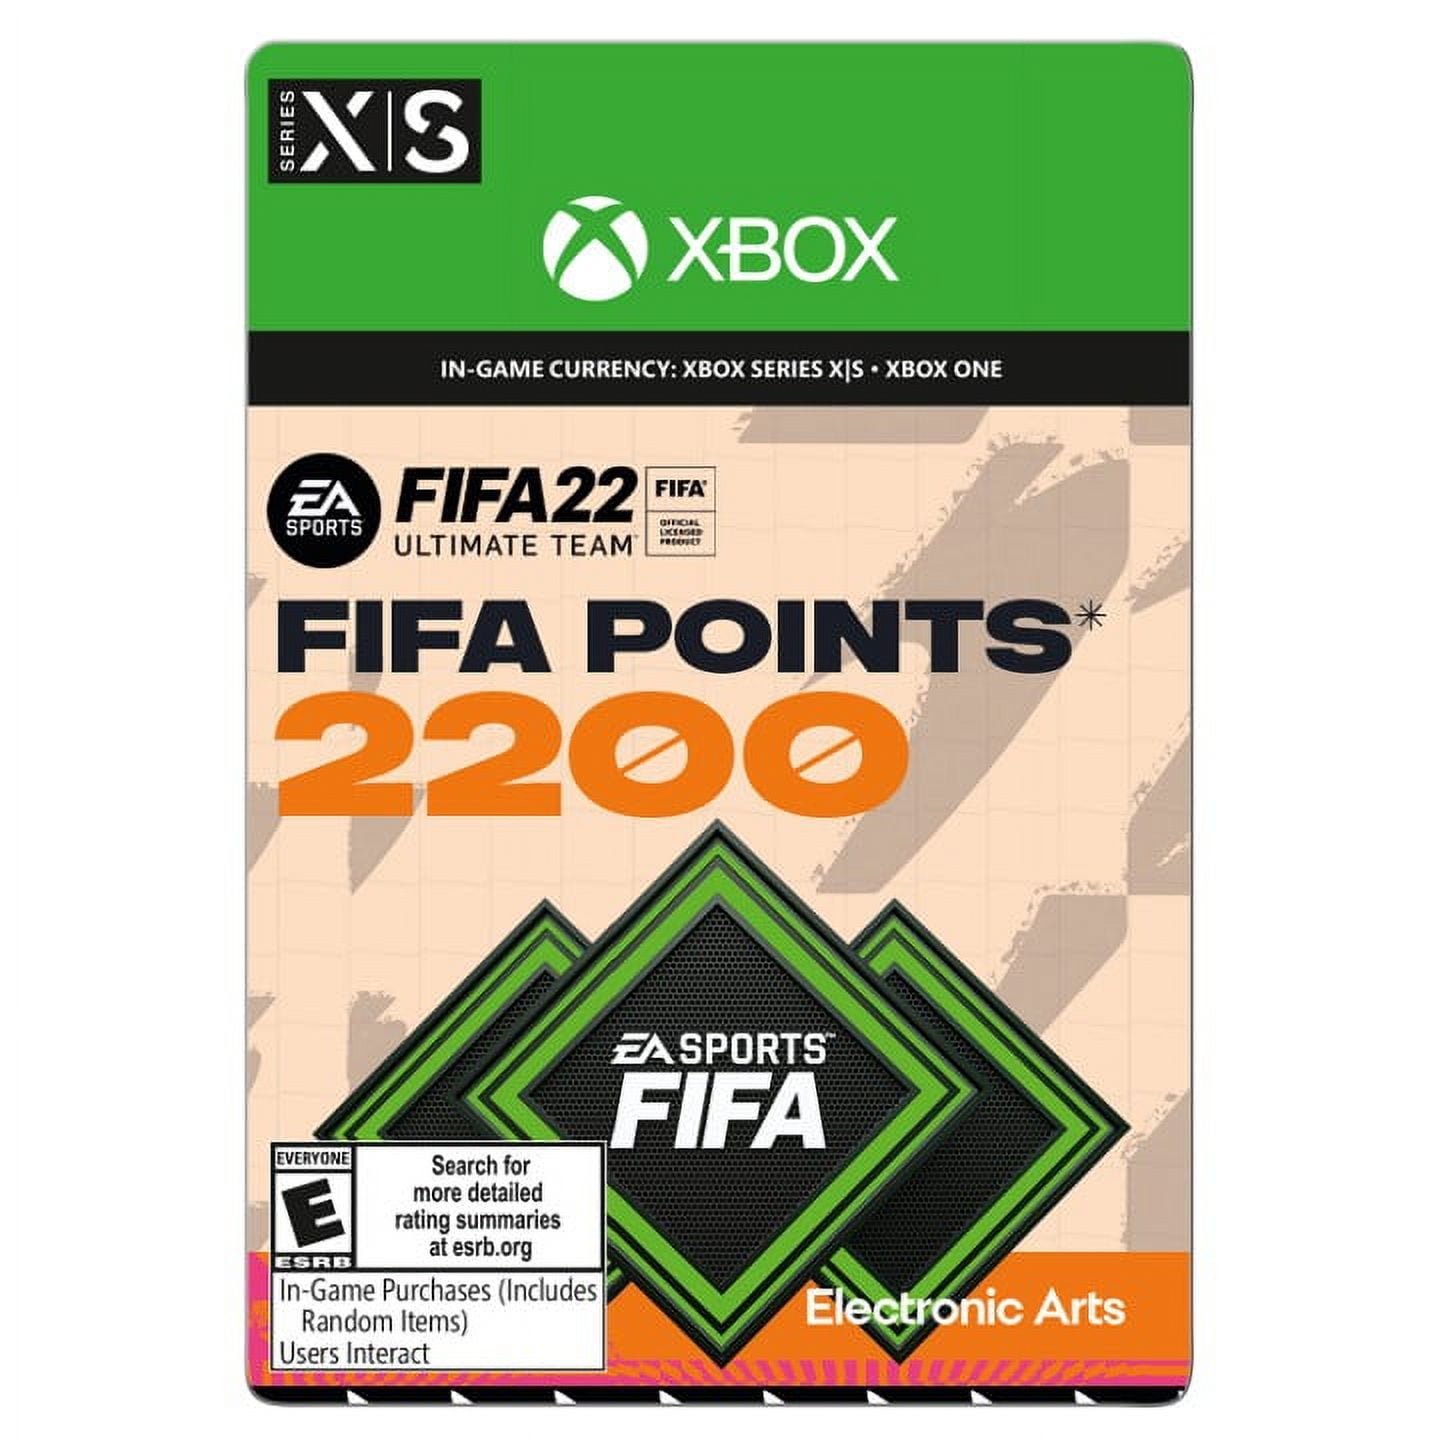 EA SPORTS FC 24 5900 FC POINTS Xbox Series X/S e Xbox One Descarga